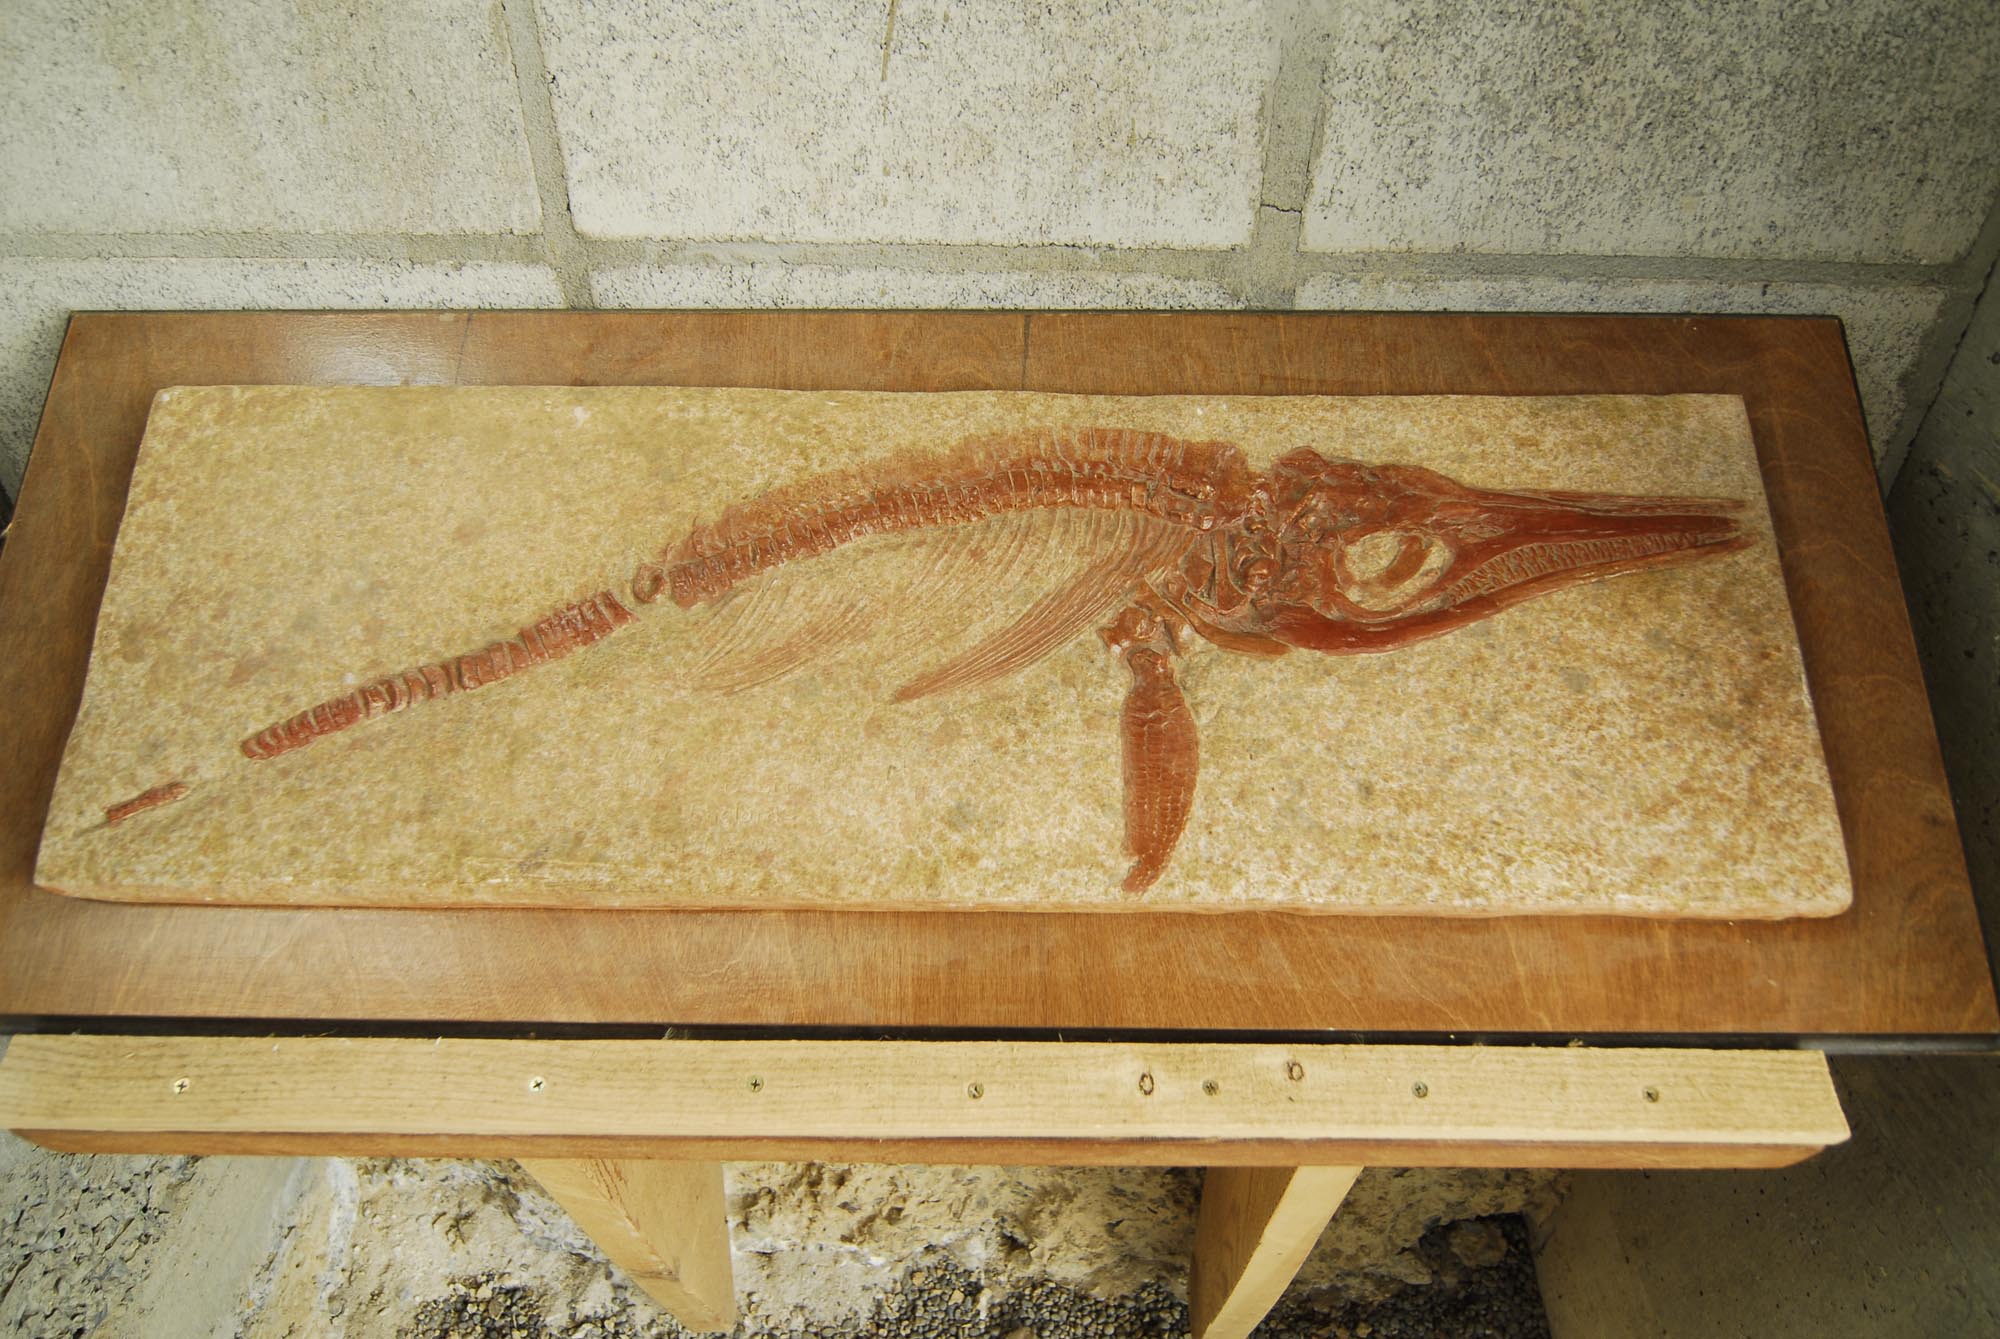 Berlin-Ichthyosaur State Park